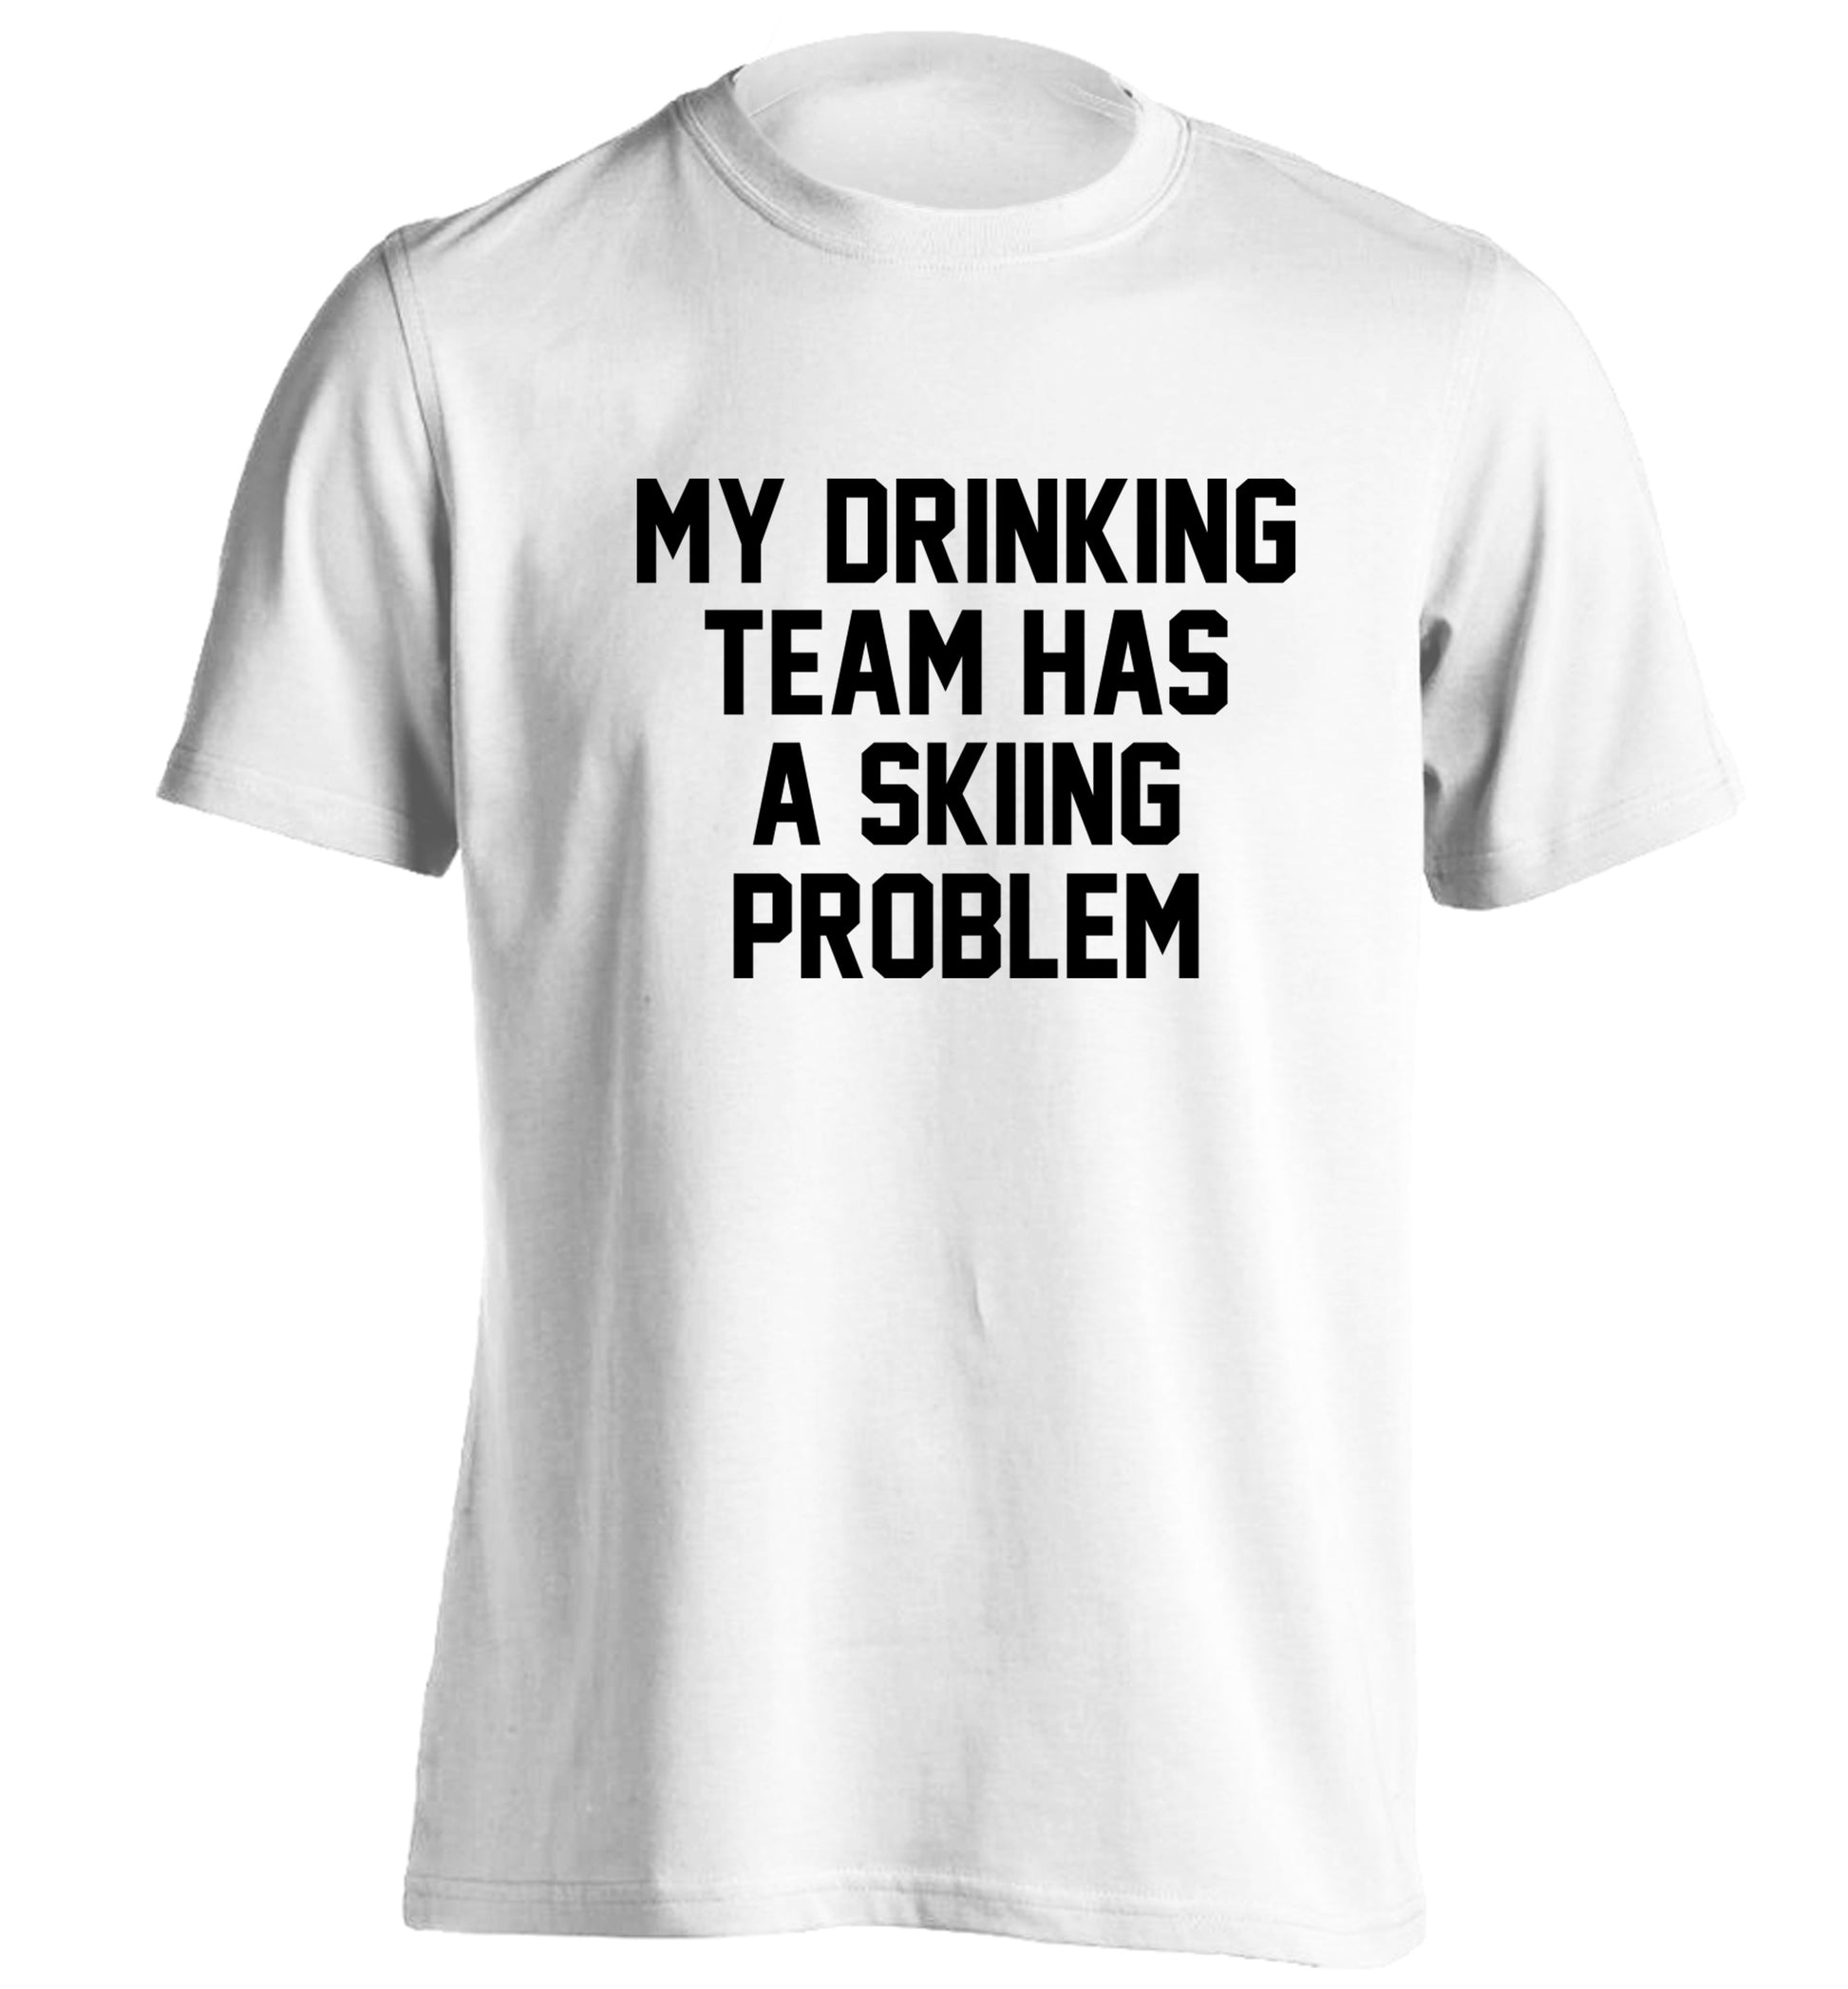 My drinking team has a skiing problem adults unisexwhite Tshirt 2XL